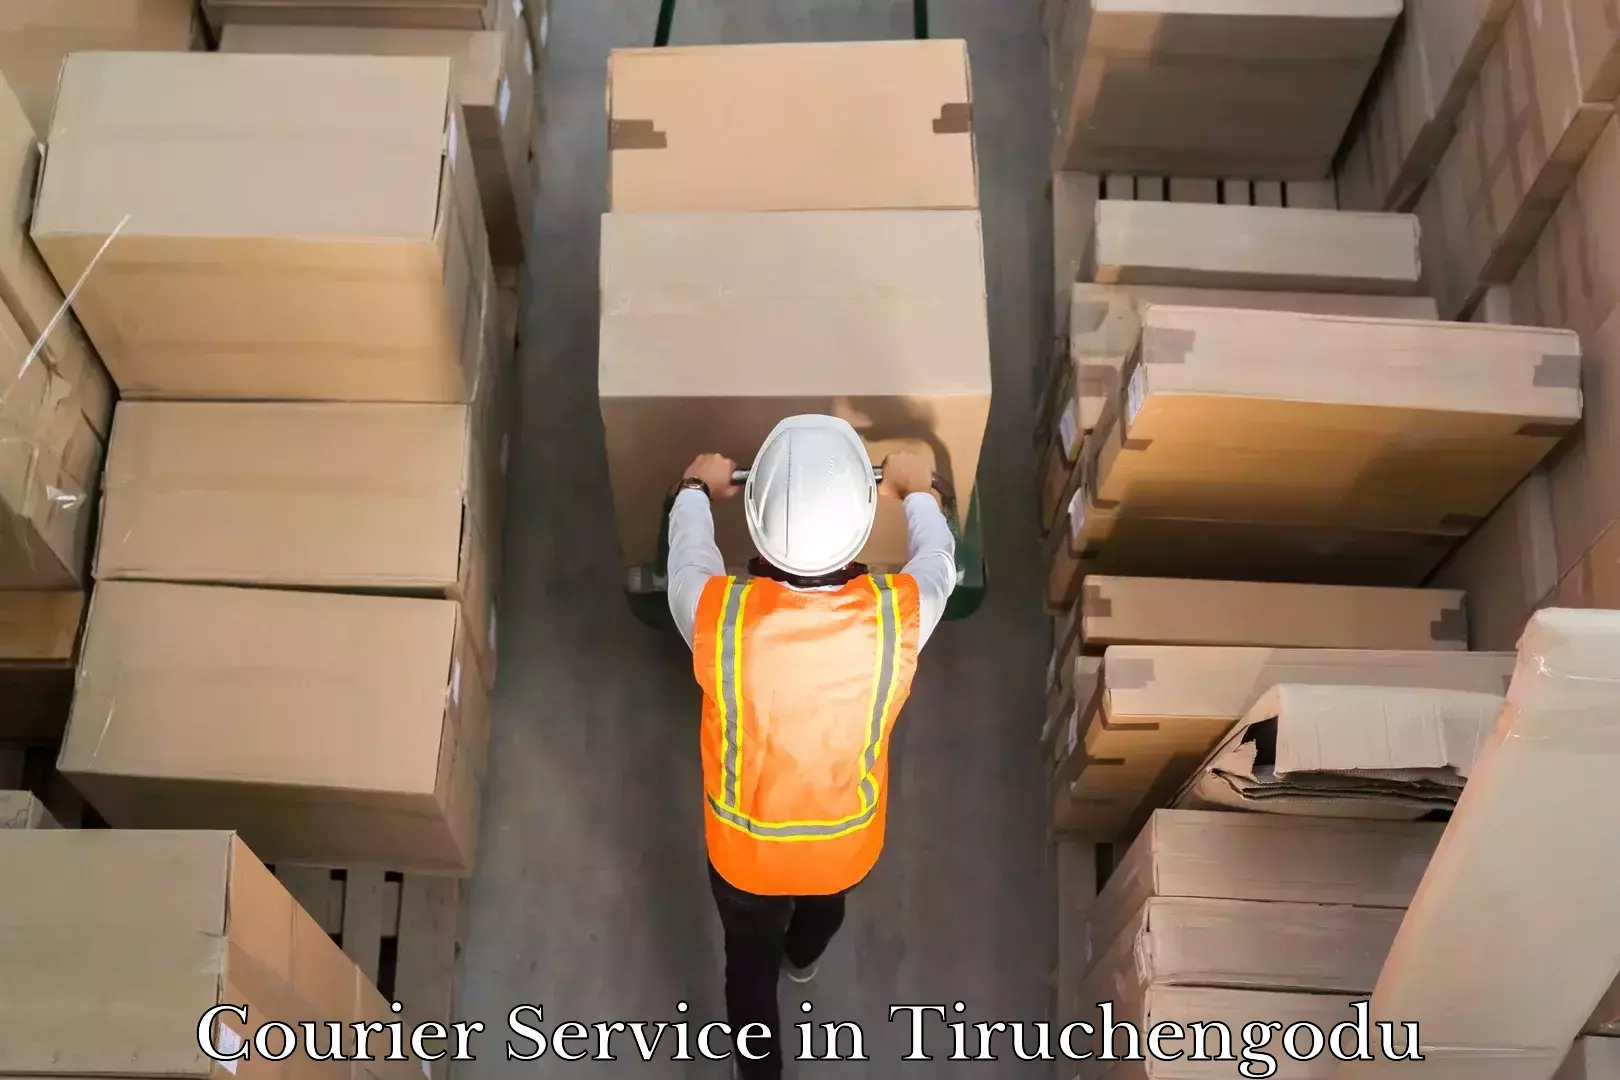 Supply chain delivery in Tiruchengodu